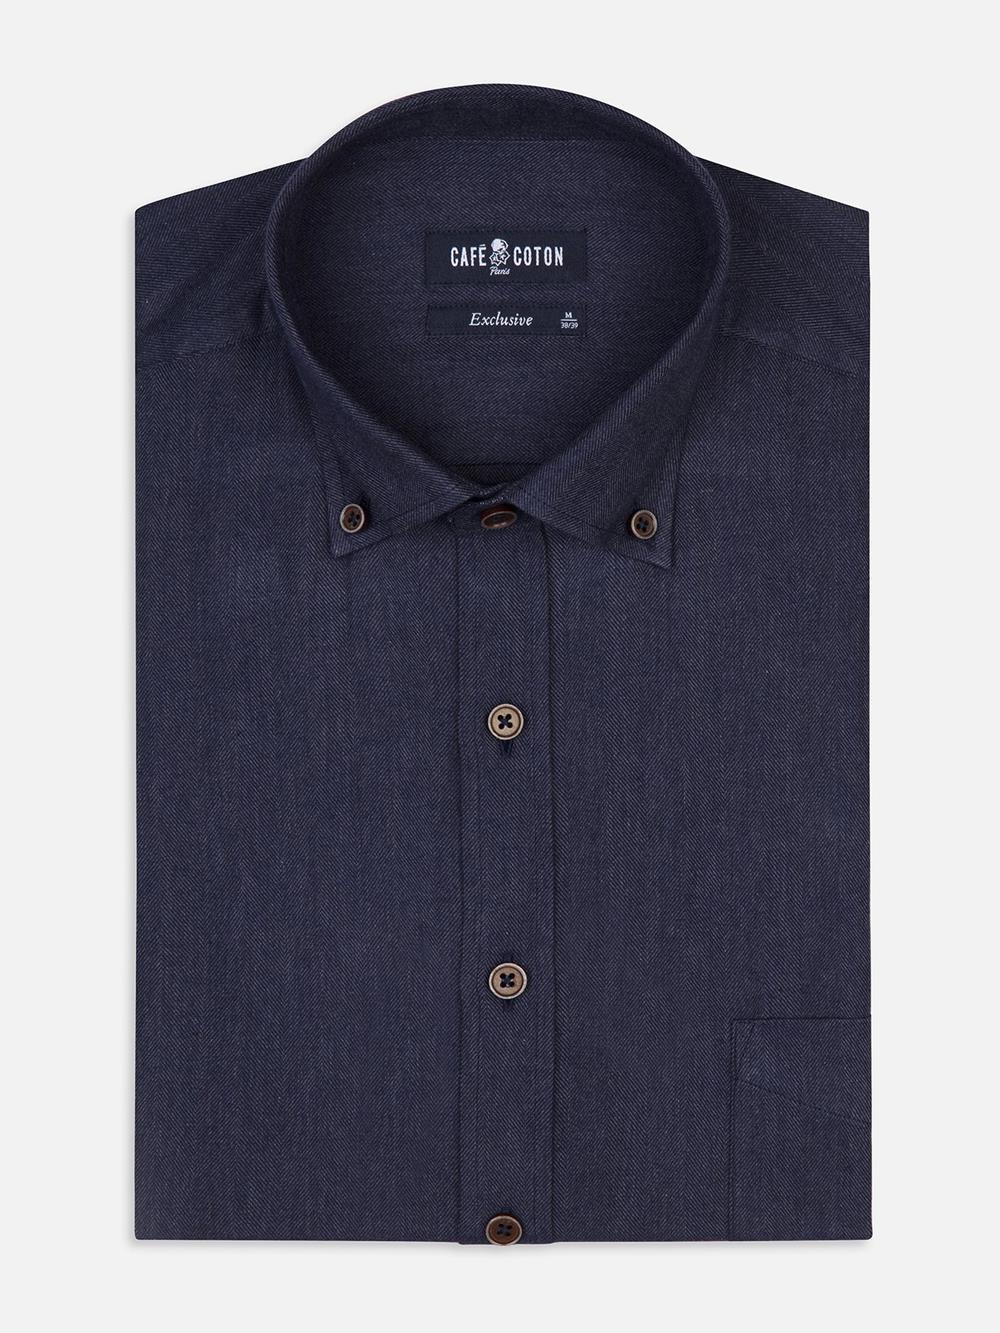 Hall navy blue flannel shirt - Button-down collar